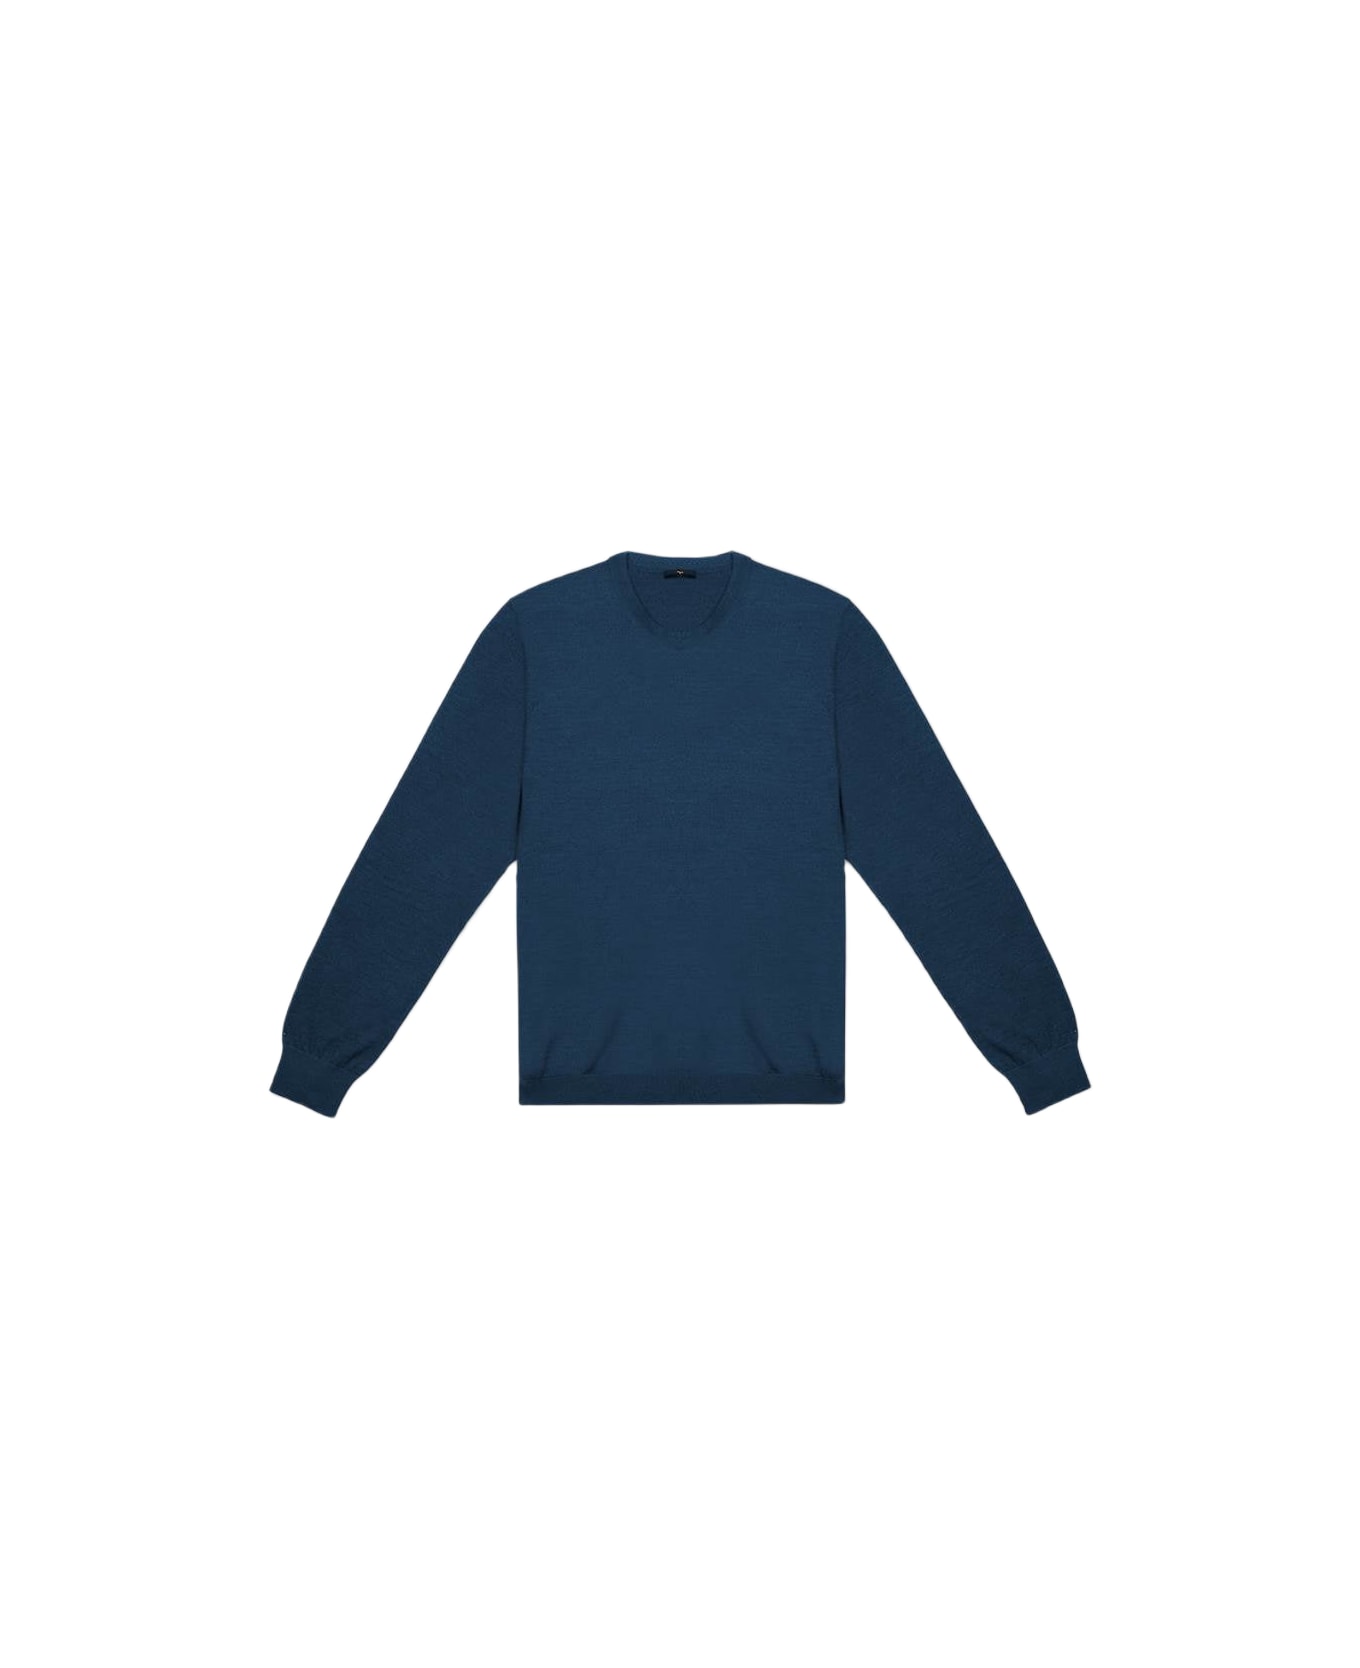 Larusmiani Crew Neck Sweater Sweater - Blue